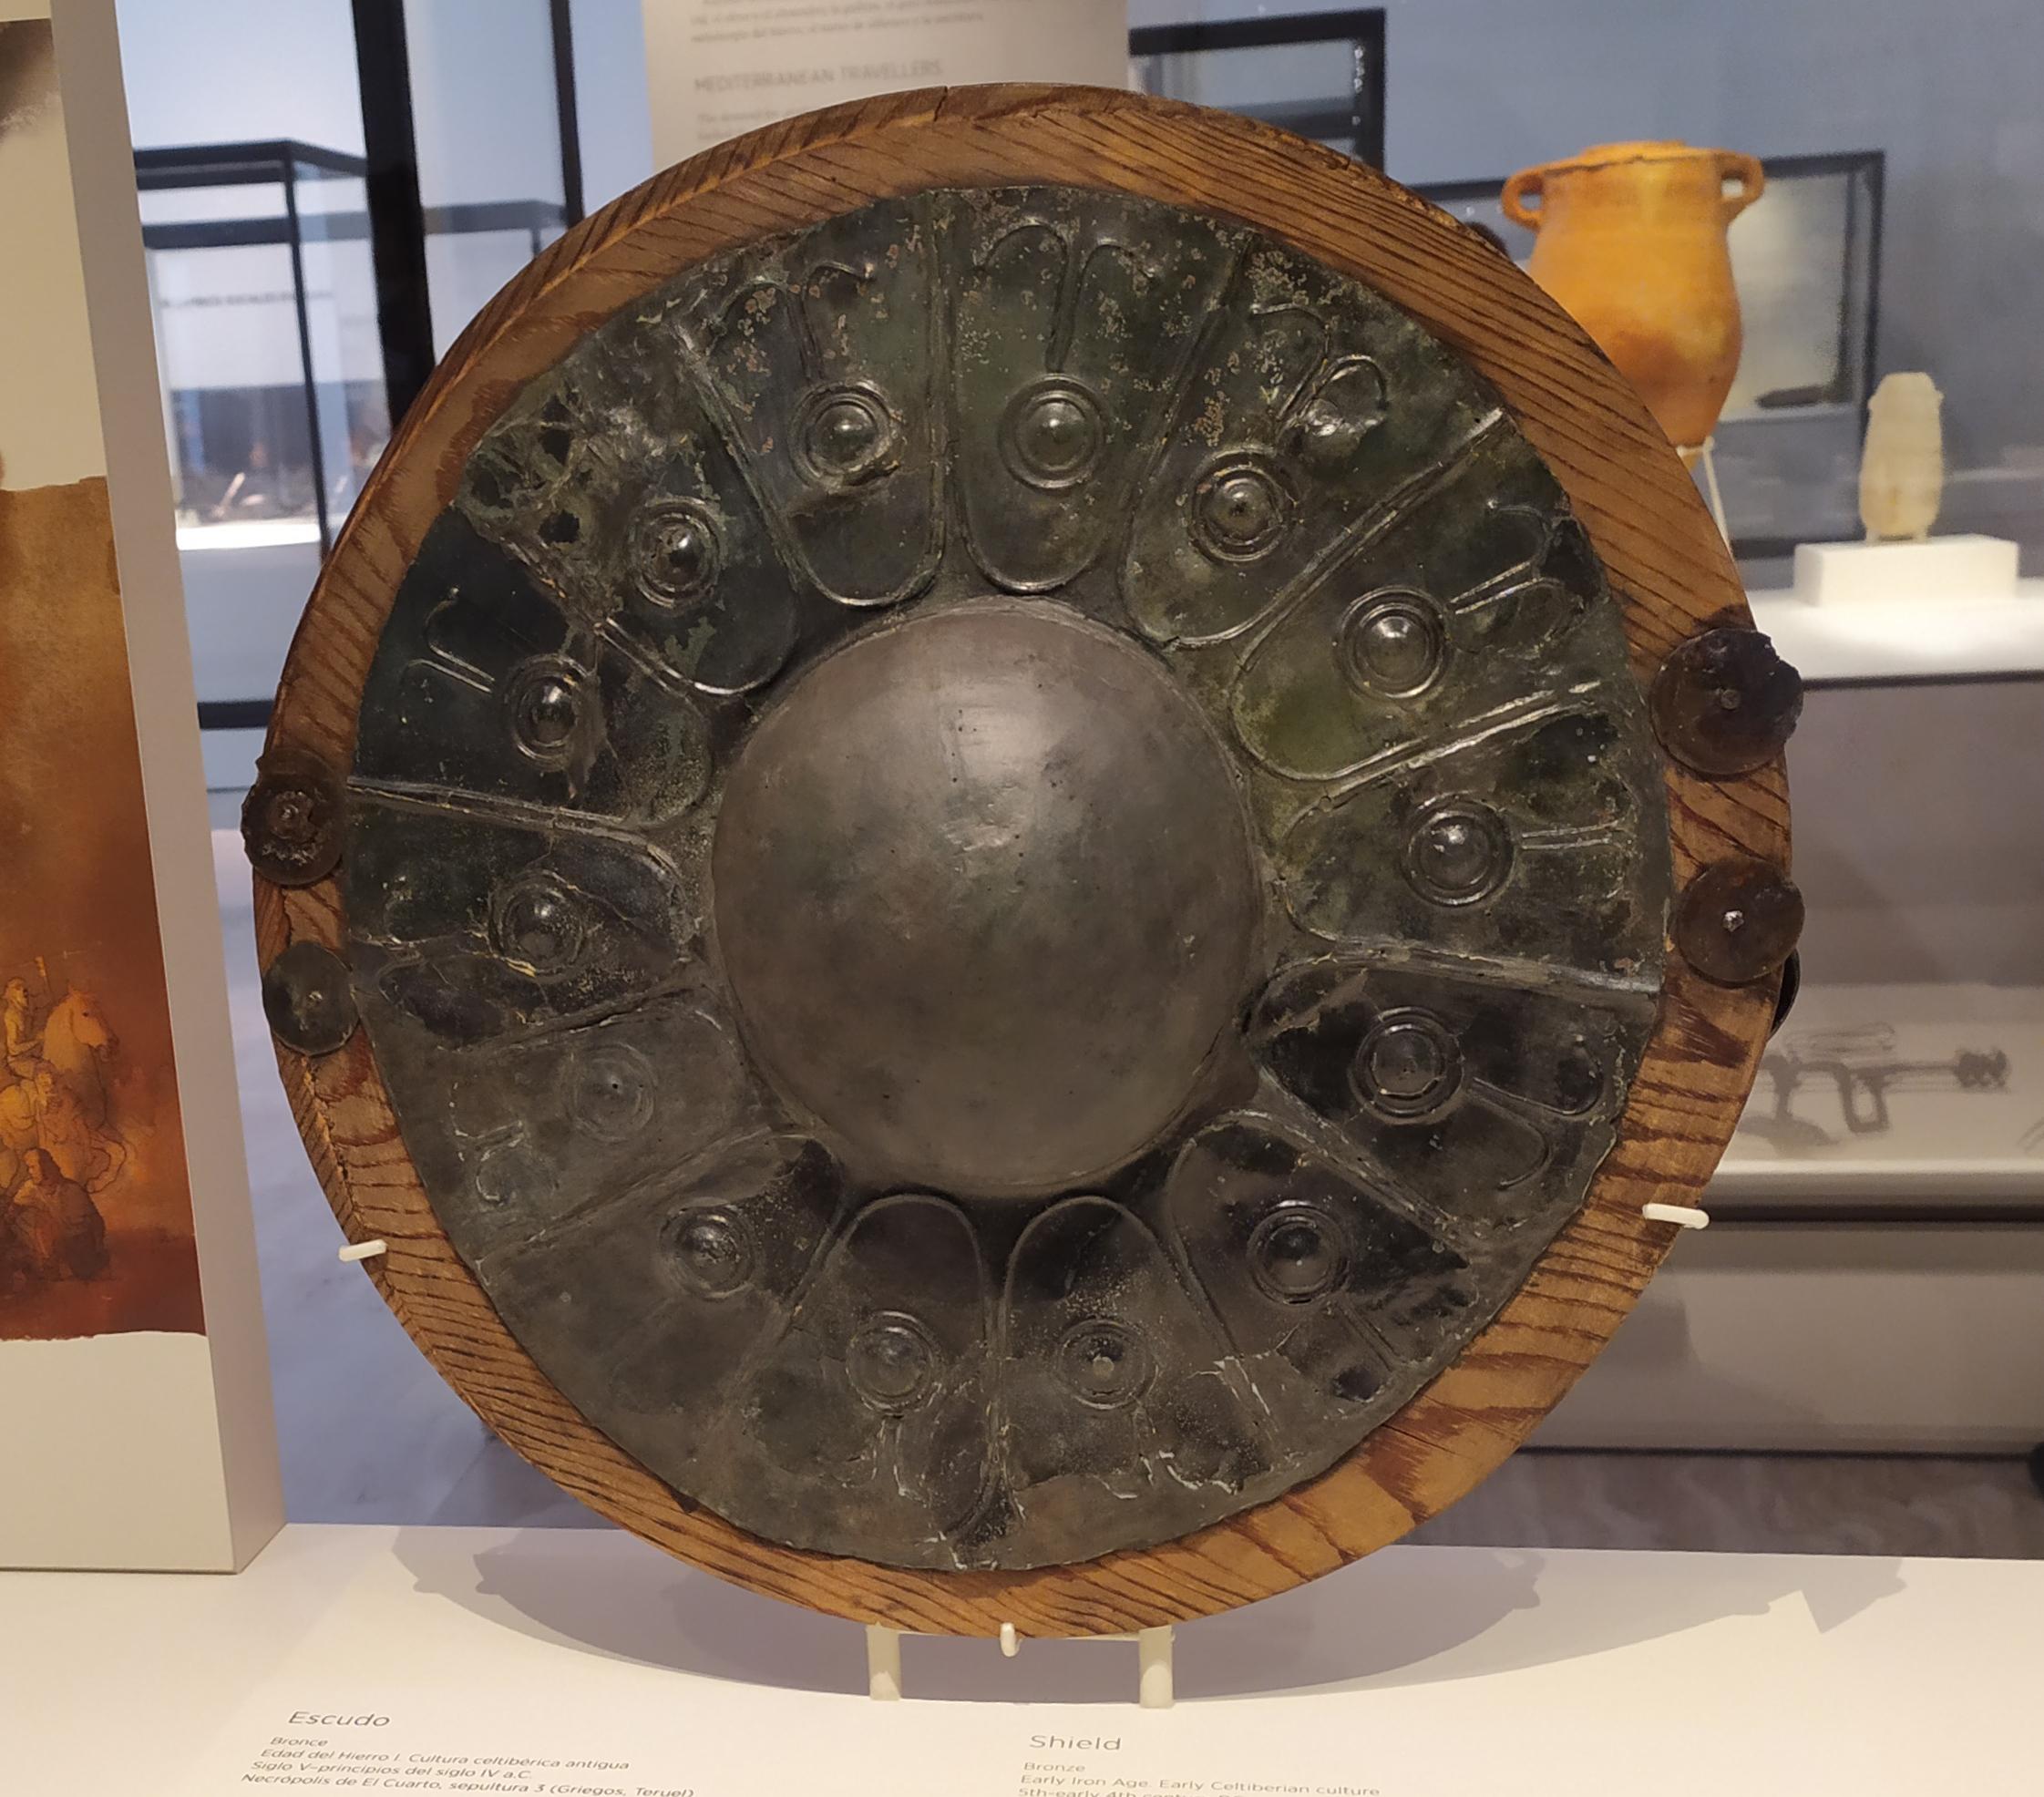 Shield. Bronze. Early Iron Age. Early Celtiberian culture. 5th-early 4th century BC (Necropolis of El Cuarto, Grave 3. Griegos, Teruel,Spain).jpg